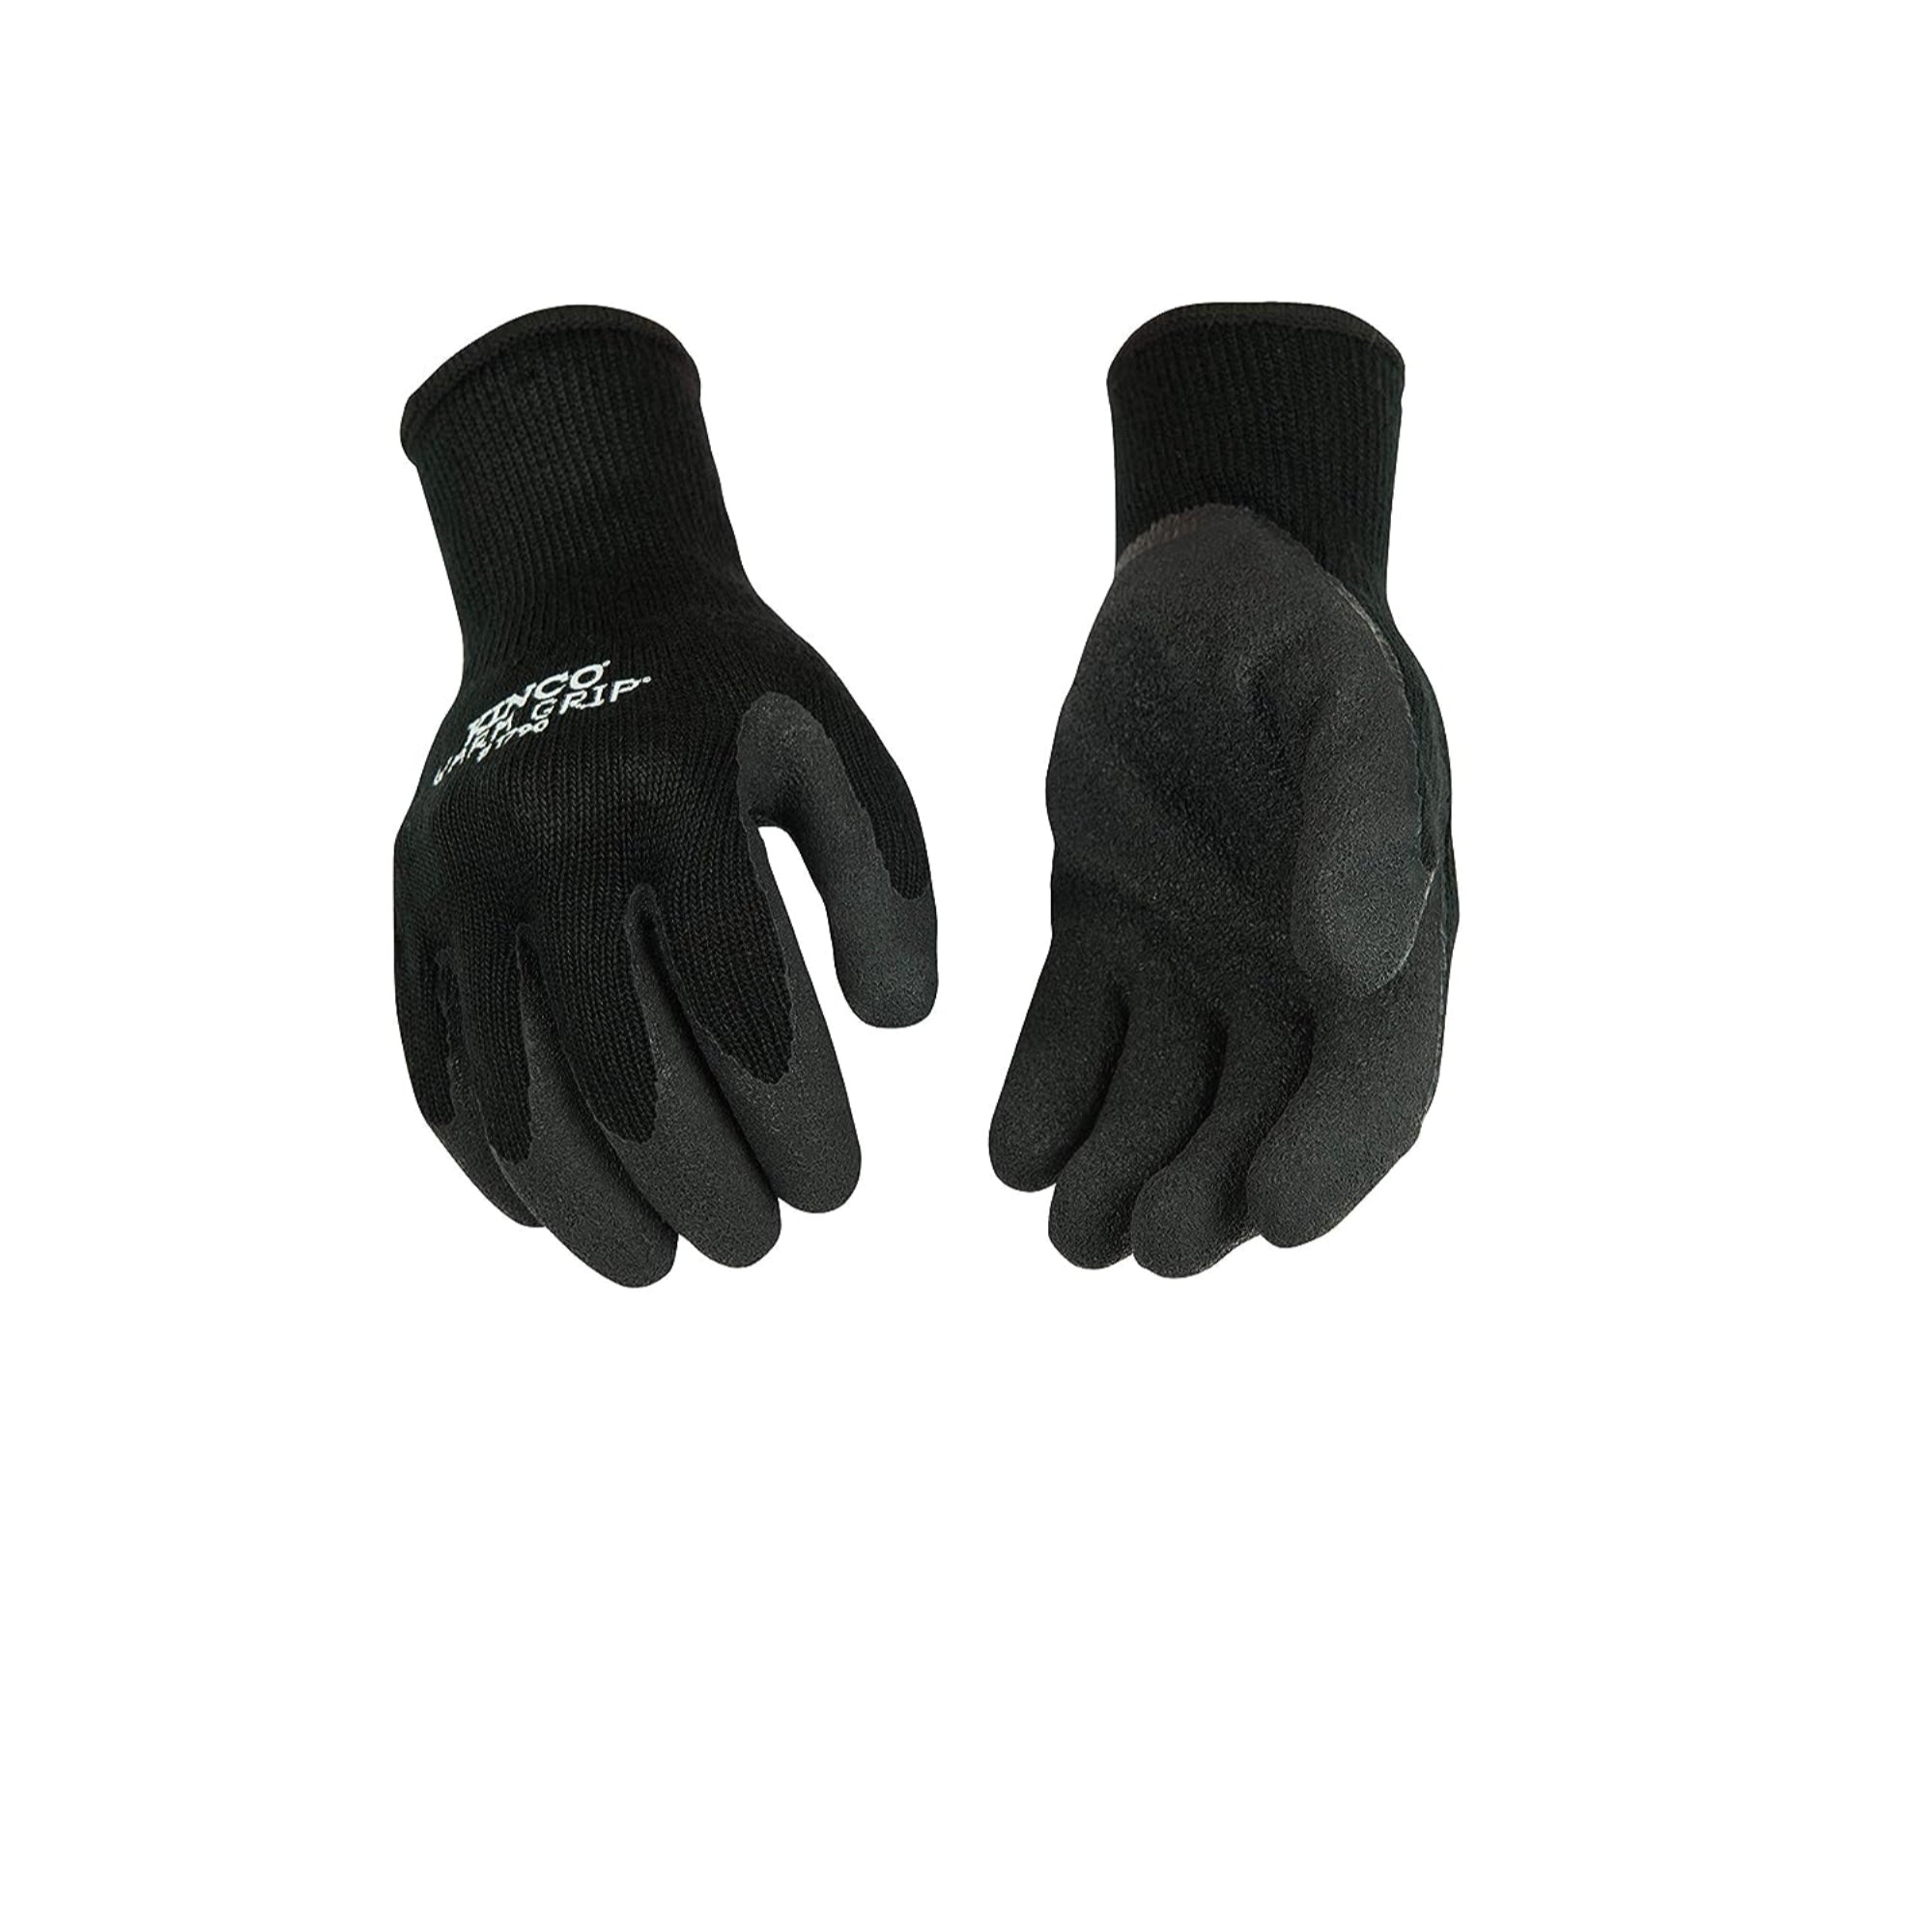 Kinco Warm Grip Thermal Knit Shell & Latex Palm, Black/Gray, XL